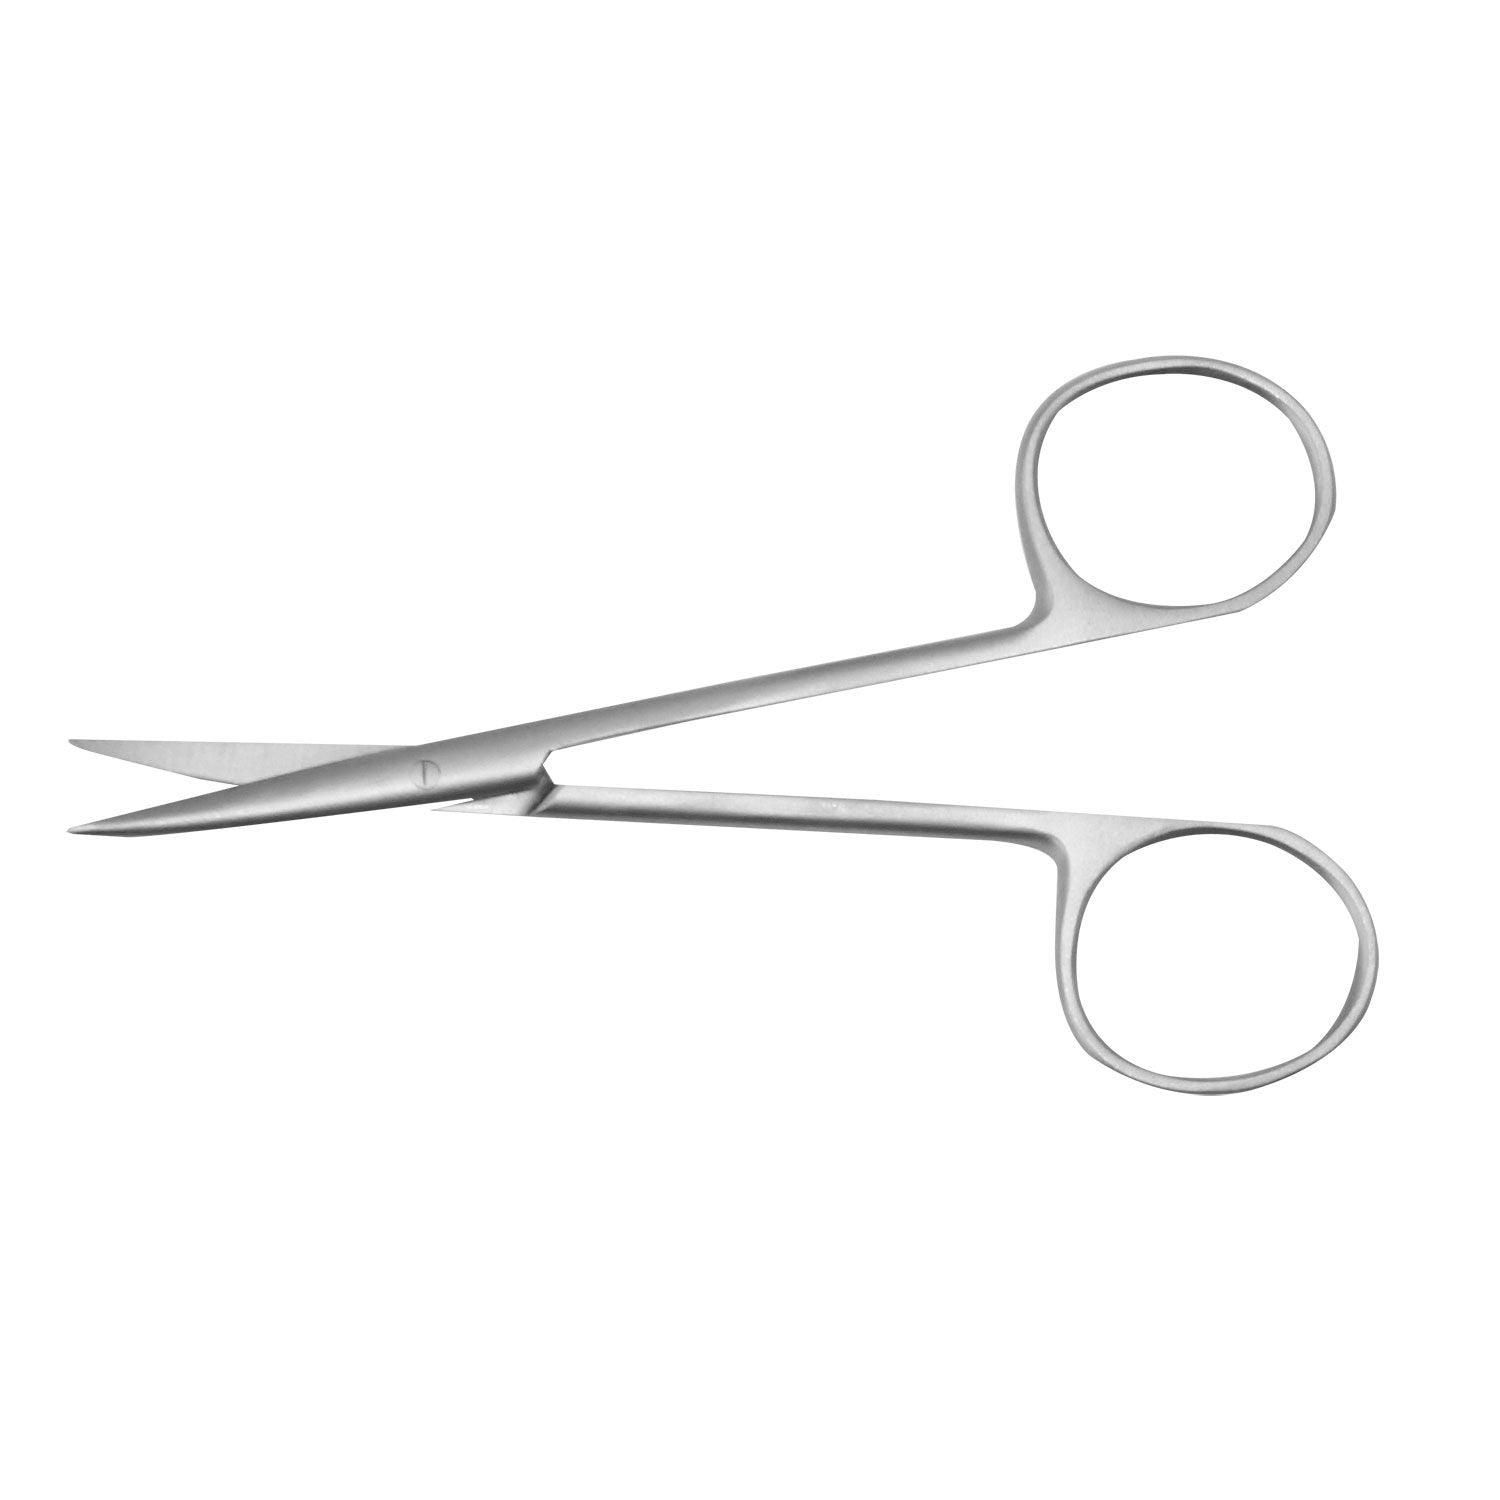 Instramed Kilner Scissors | Curved |11.5cm